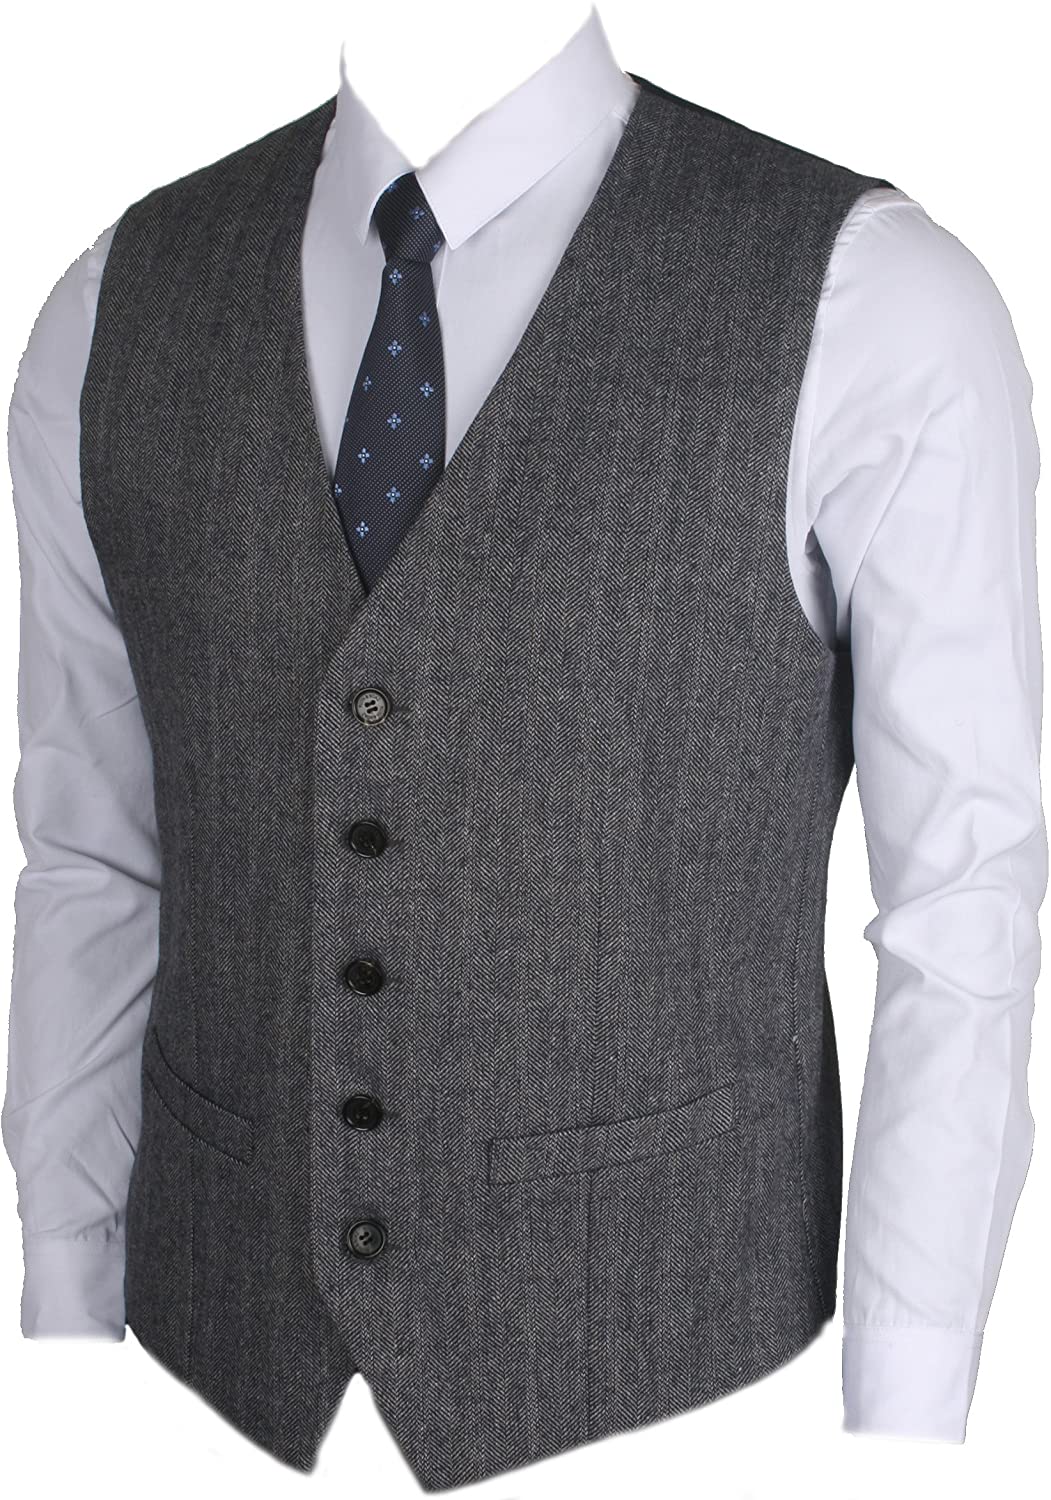 Ruth&Boaz 2Pockets 5Buttons Wool Herringbone Tweed Business Suit Vest